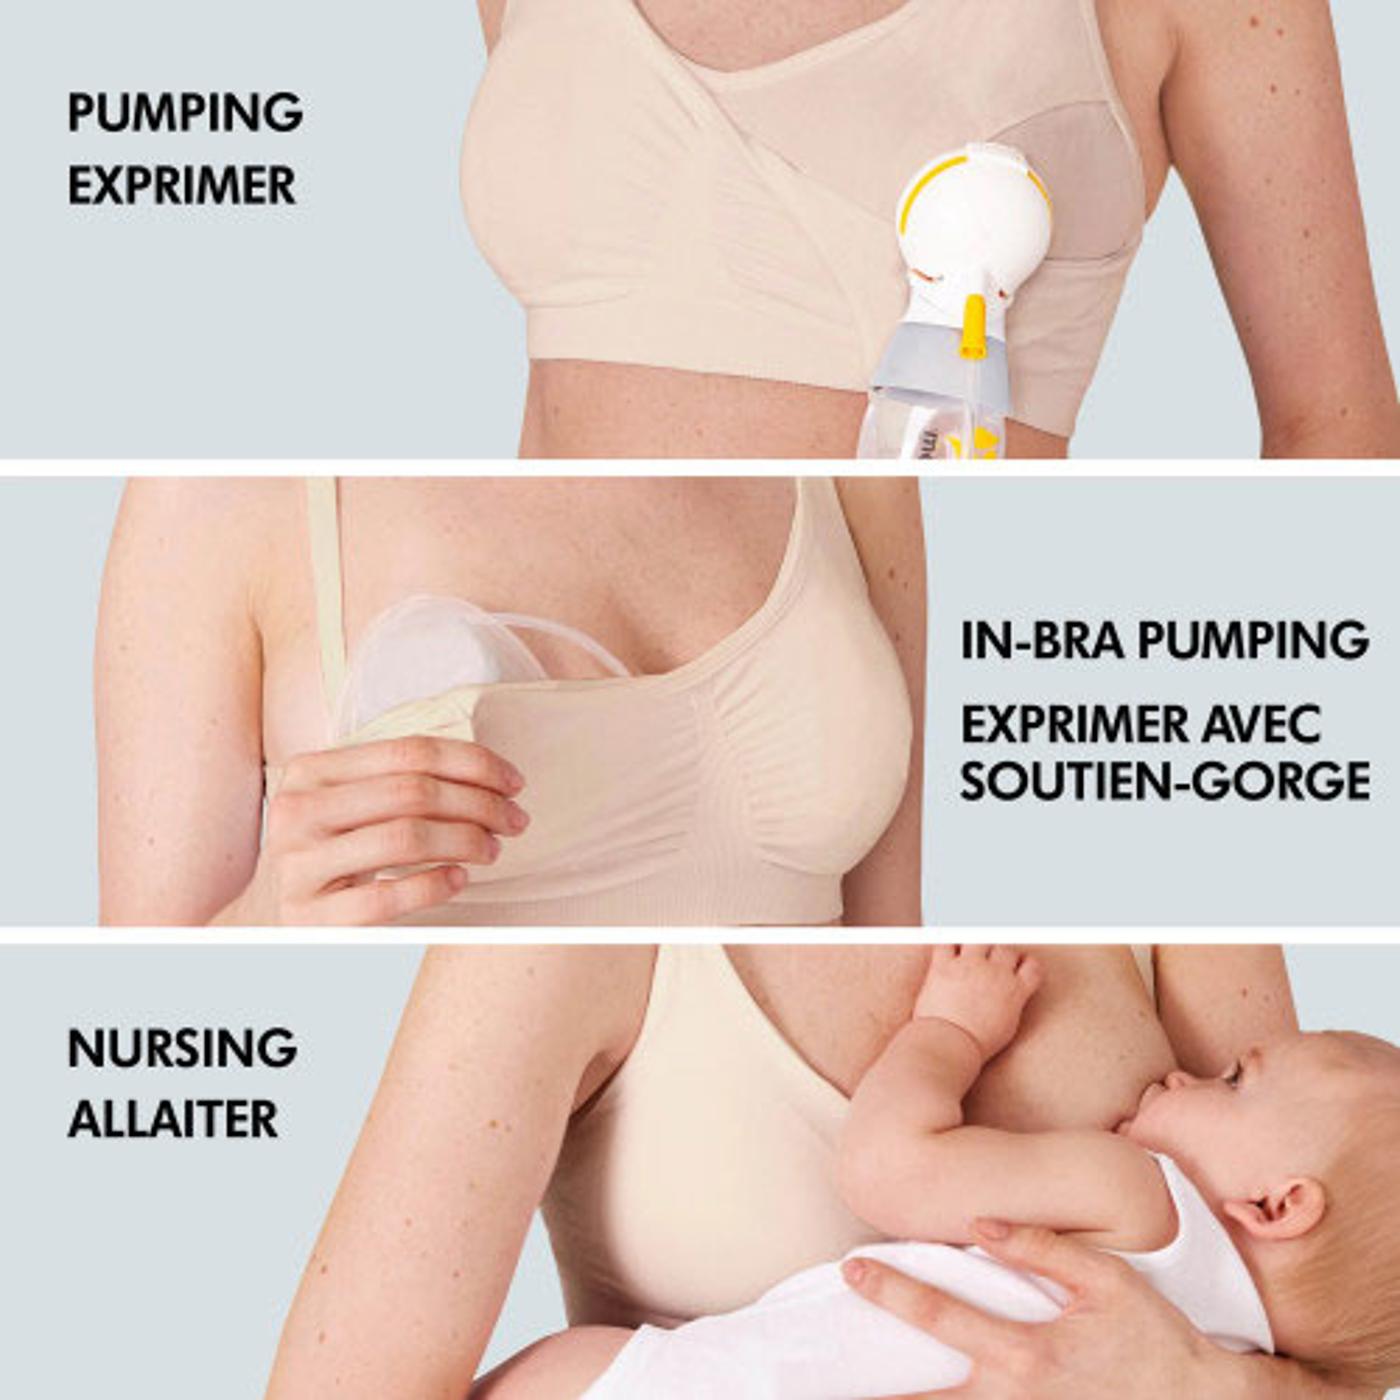 3 in 1 Handfree Pumping bra nursing bra Sport Bra